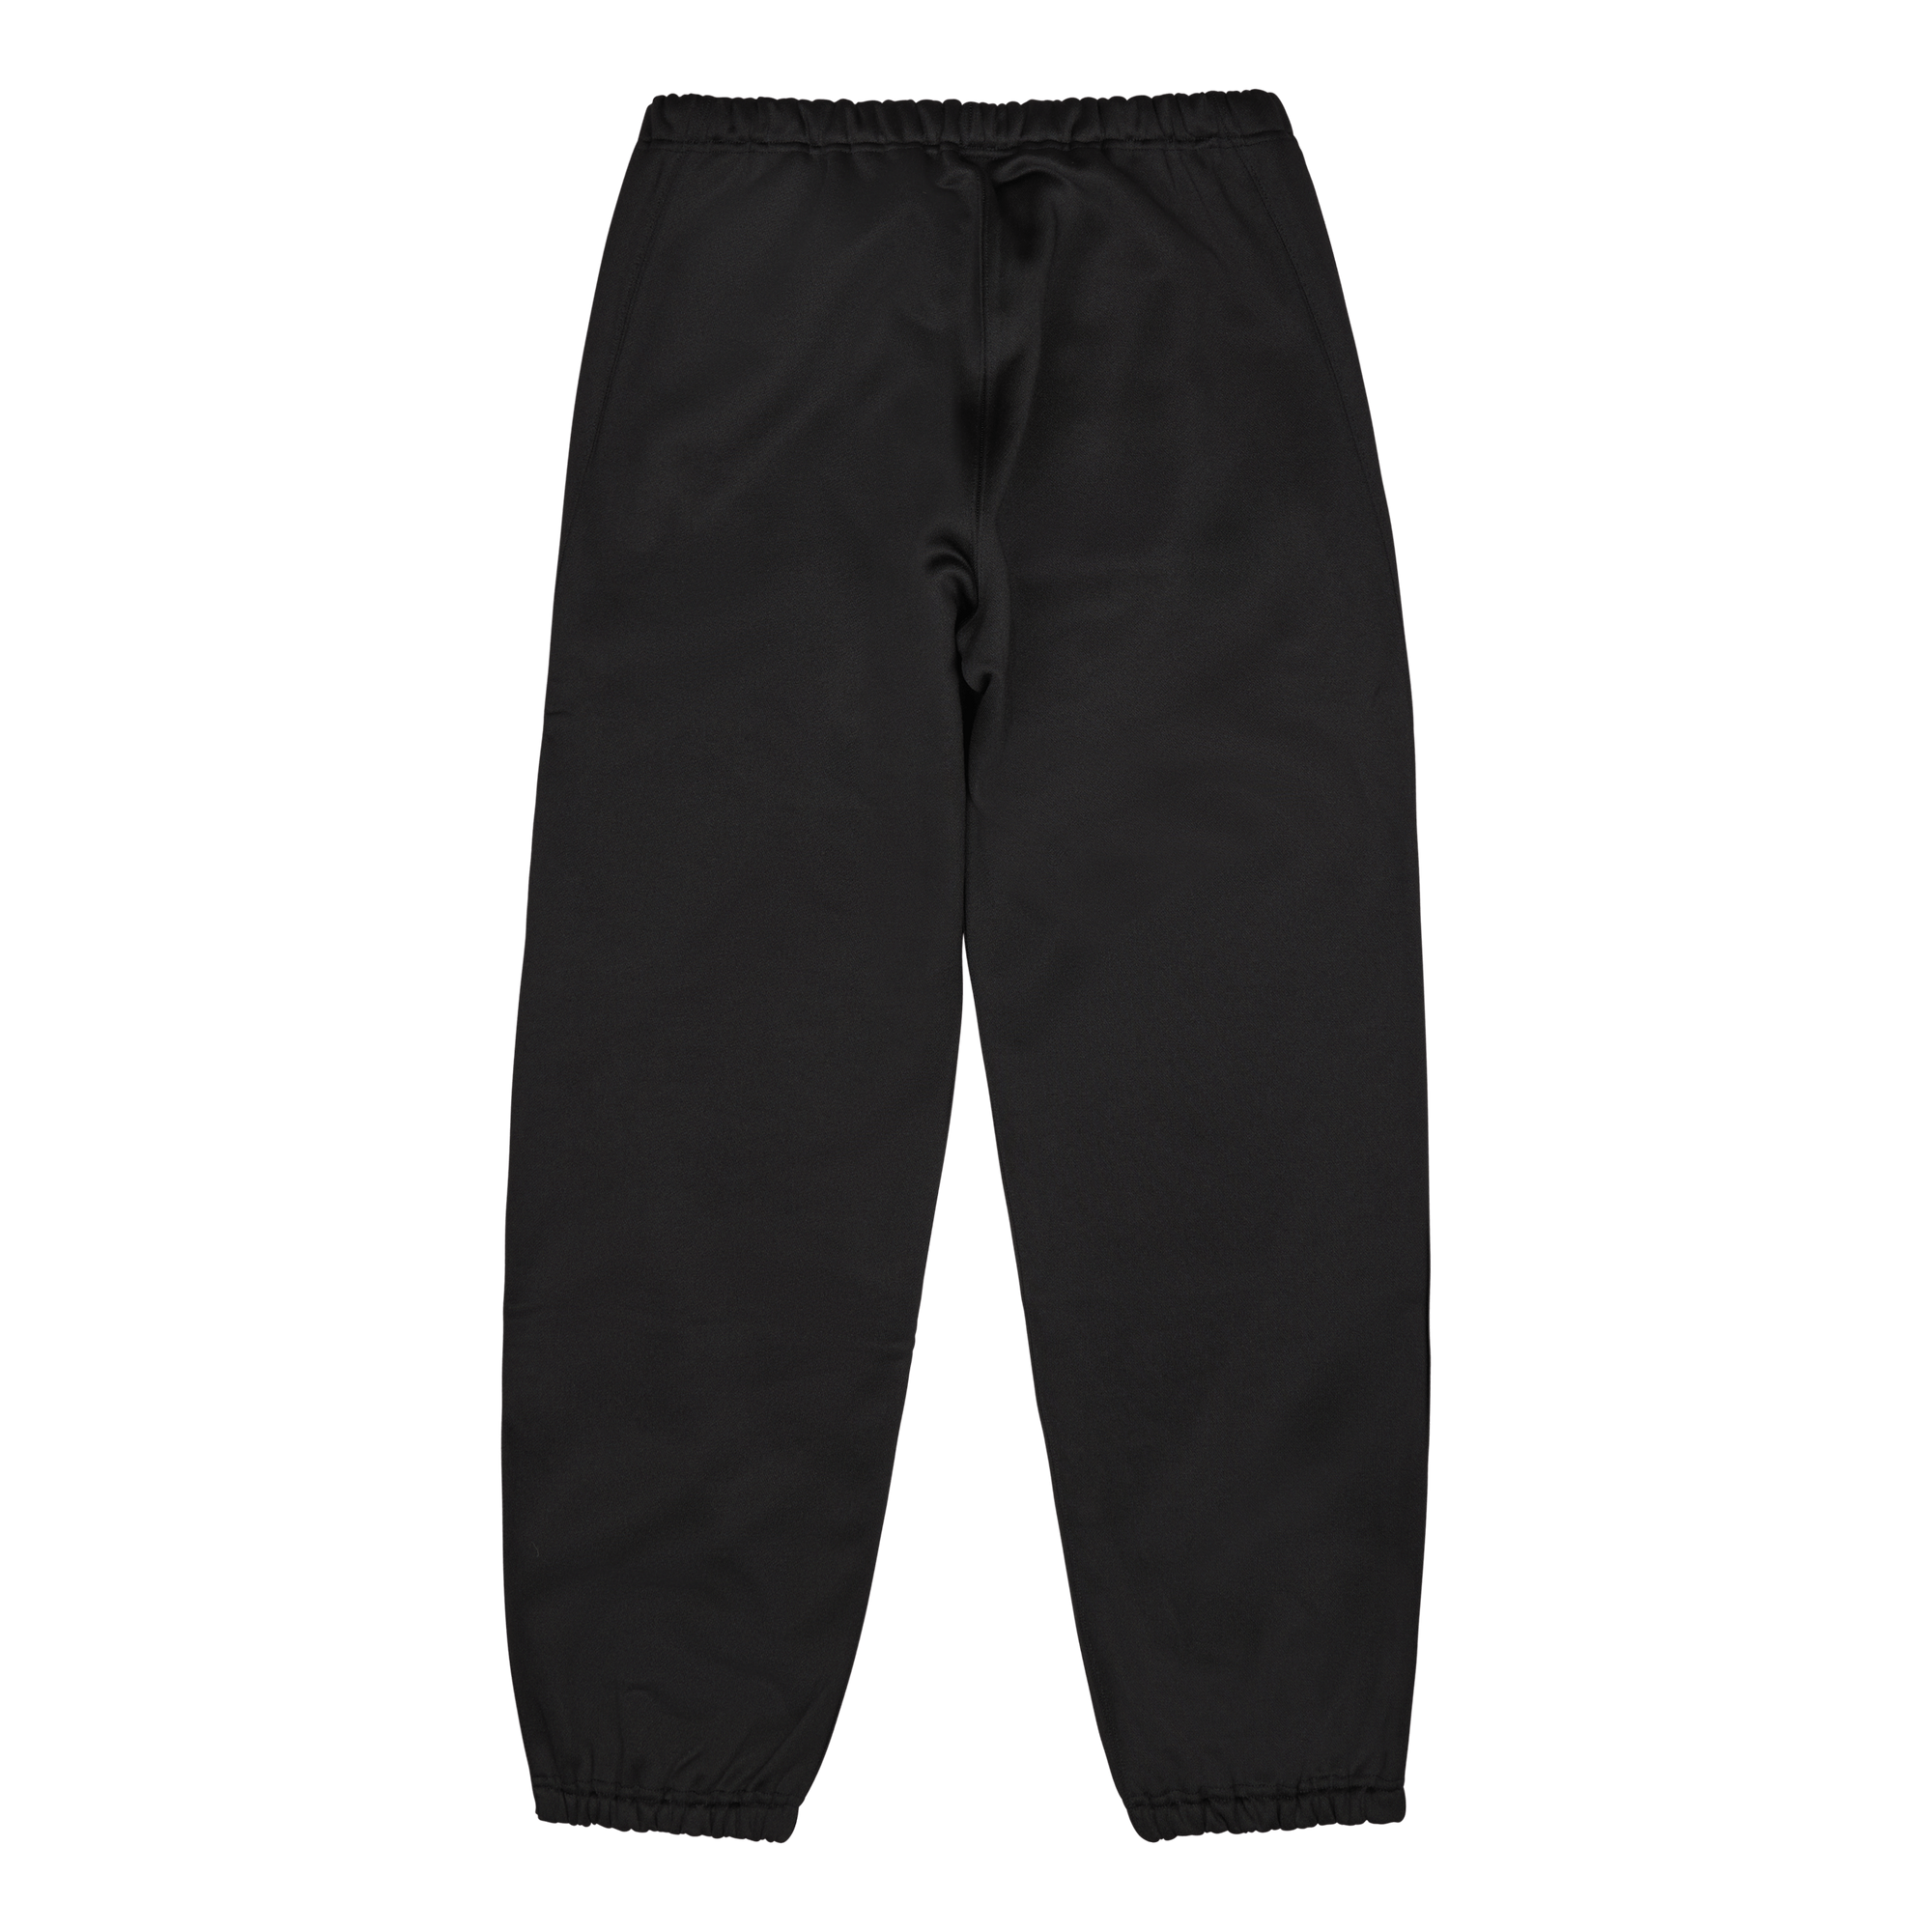 Zipped Sweat Pant - Pe/c Lined Black